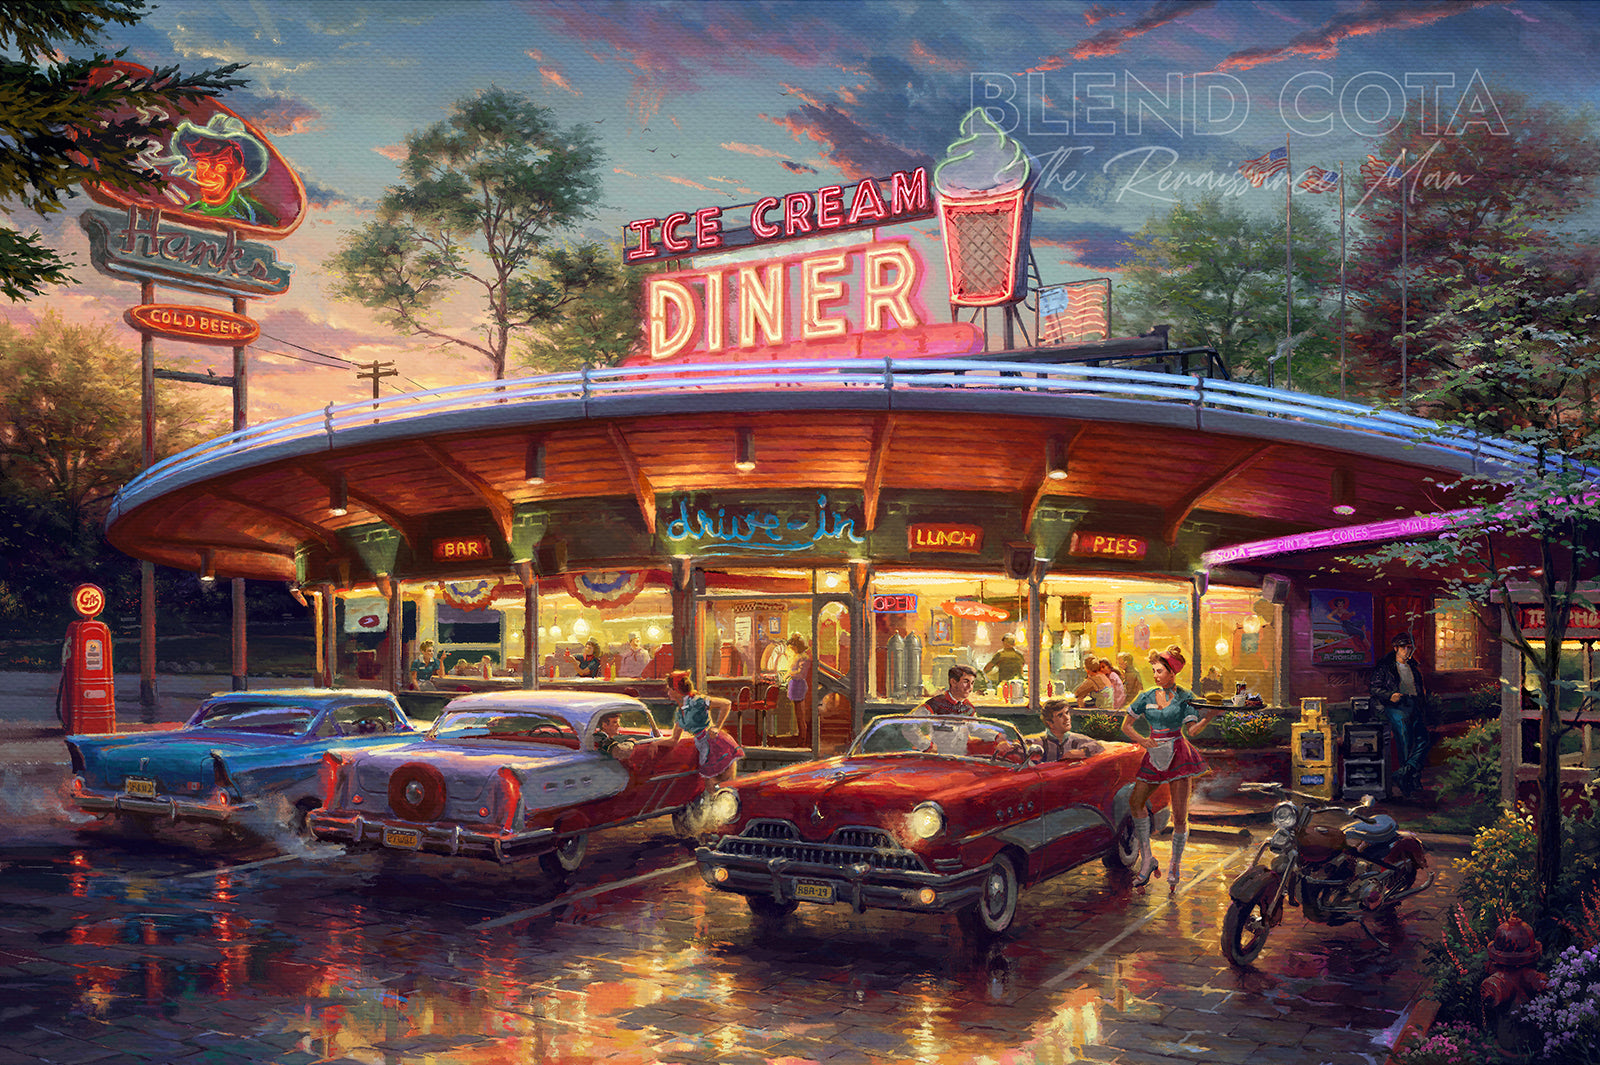 Meet you at the diner - 1950s diner night scene summer drive in - Blend Cota original oil painting - renaissance revival - blend cota studios art